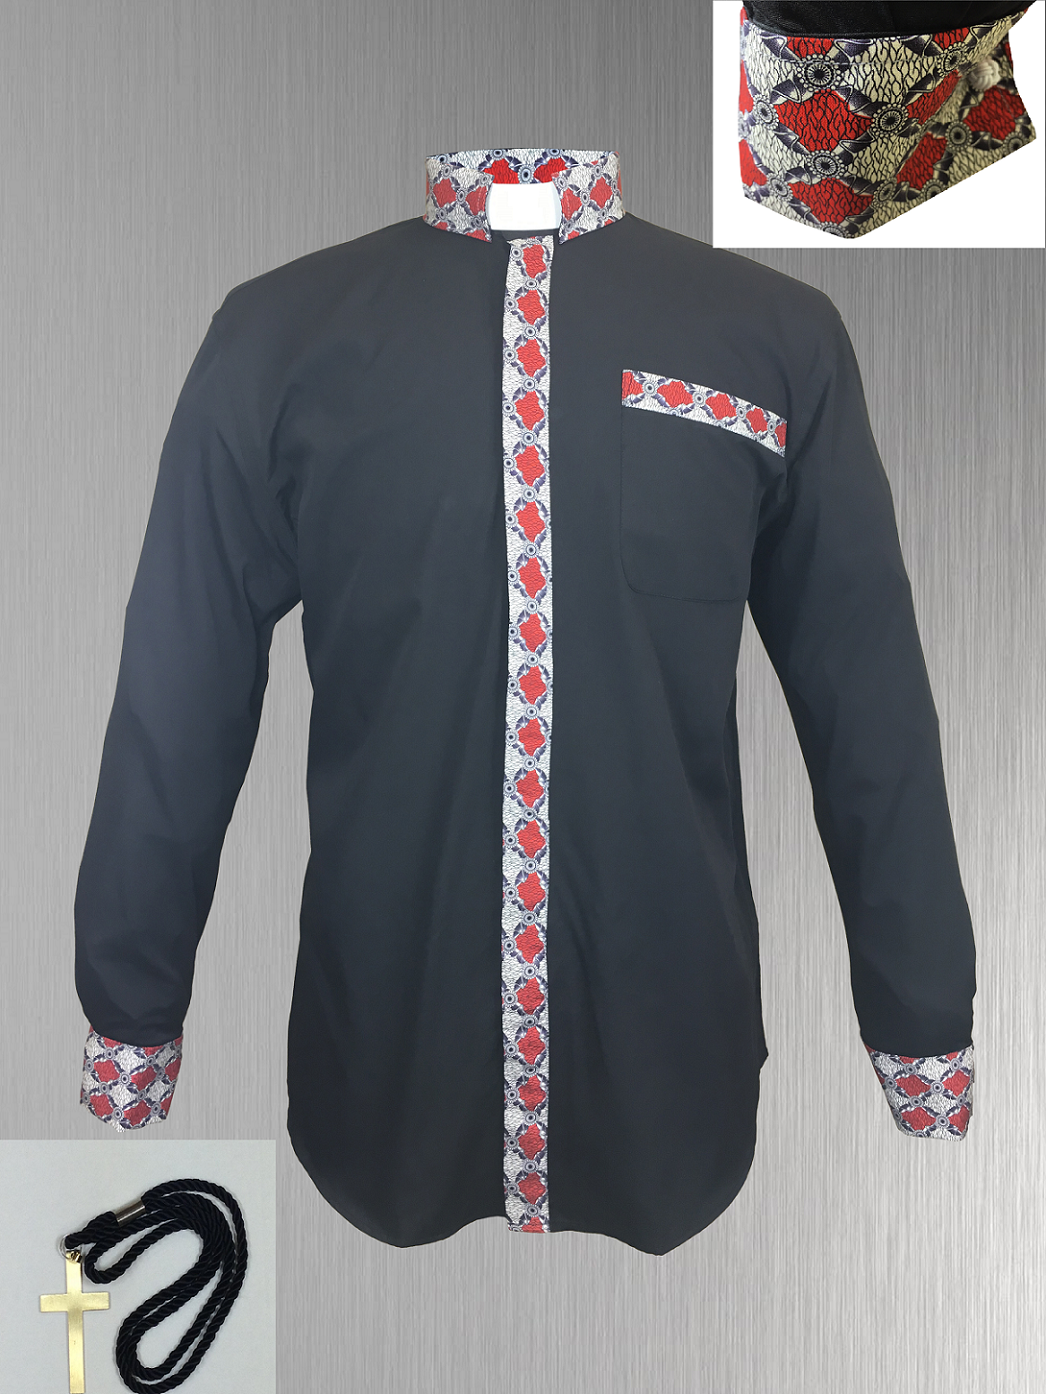 144. Custom Edition Meraki Argyle Men’s Tab Collar Clergy Shirt Set - Black